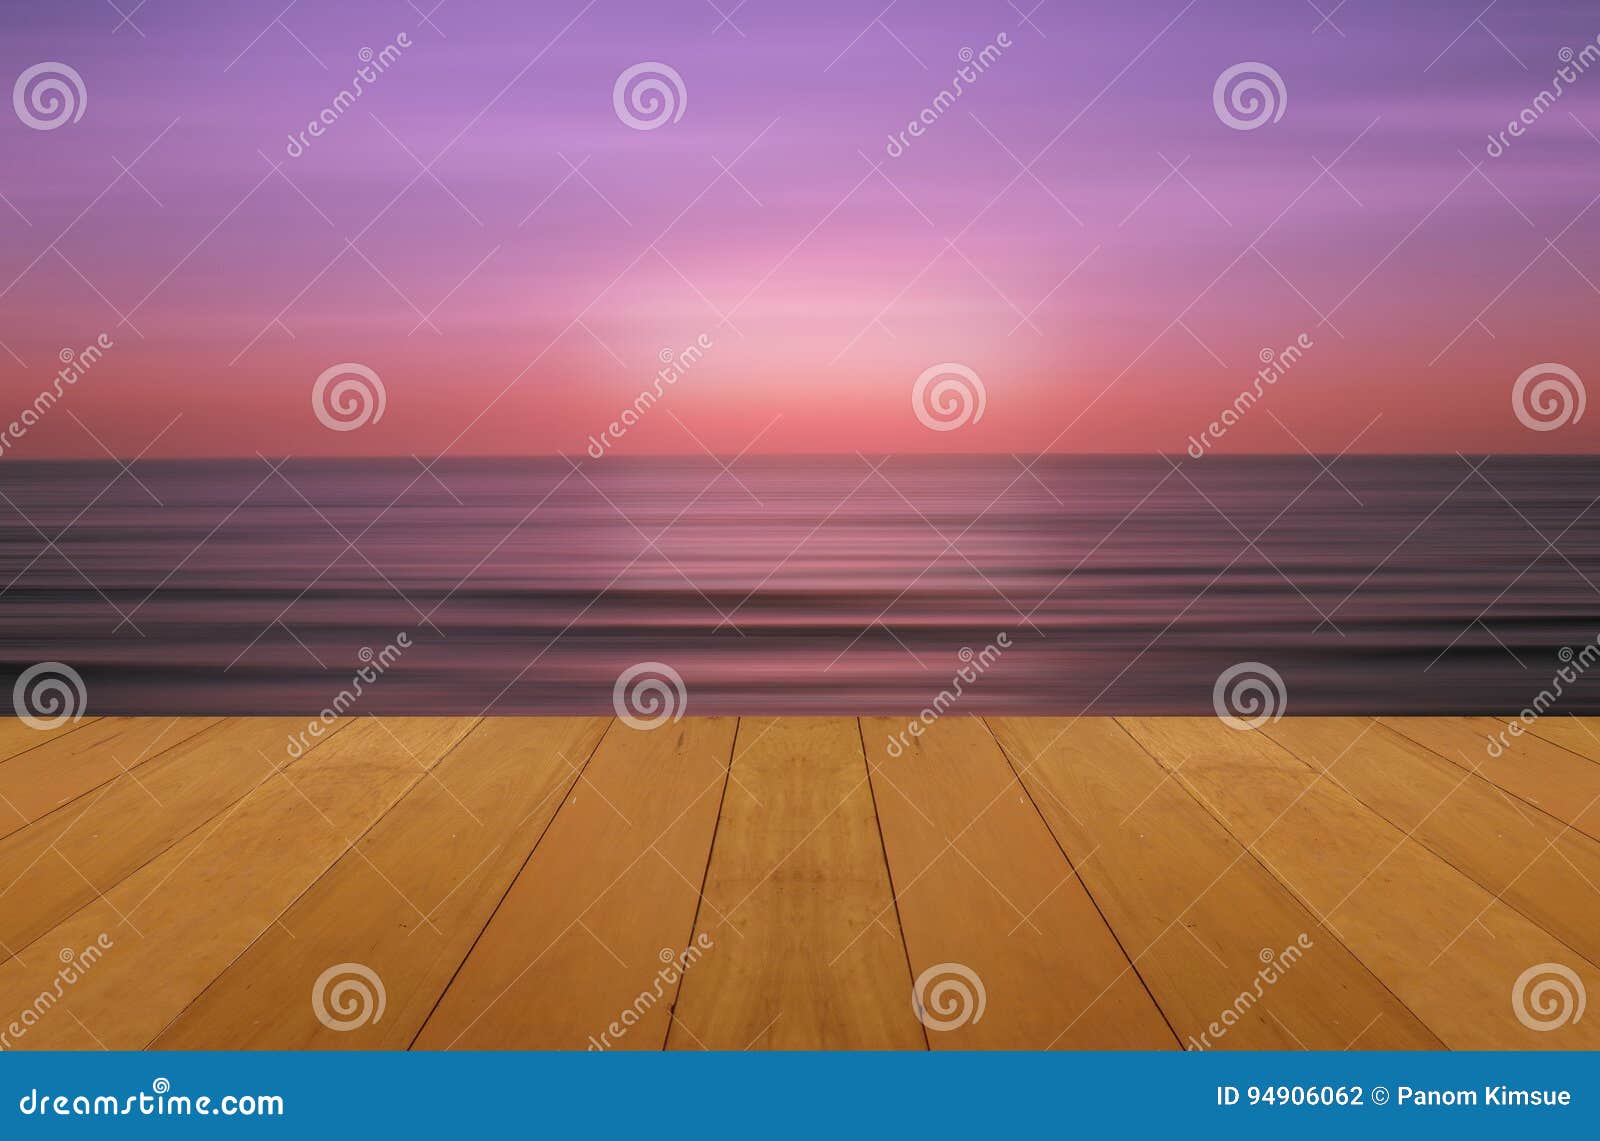 wood floor on sea with purple sunset burning skie beautiful natural tropical sea